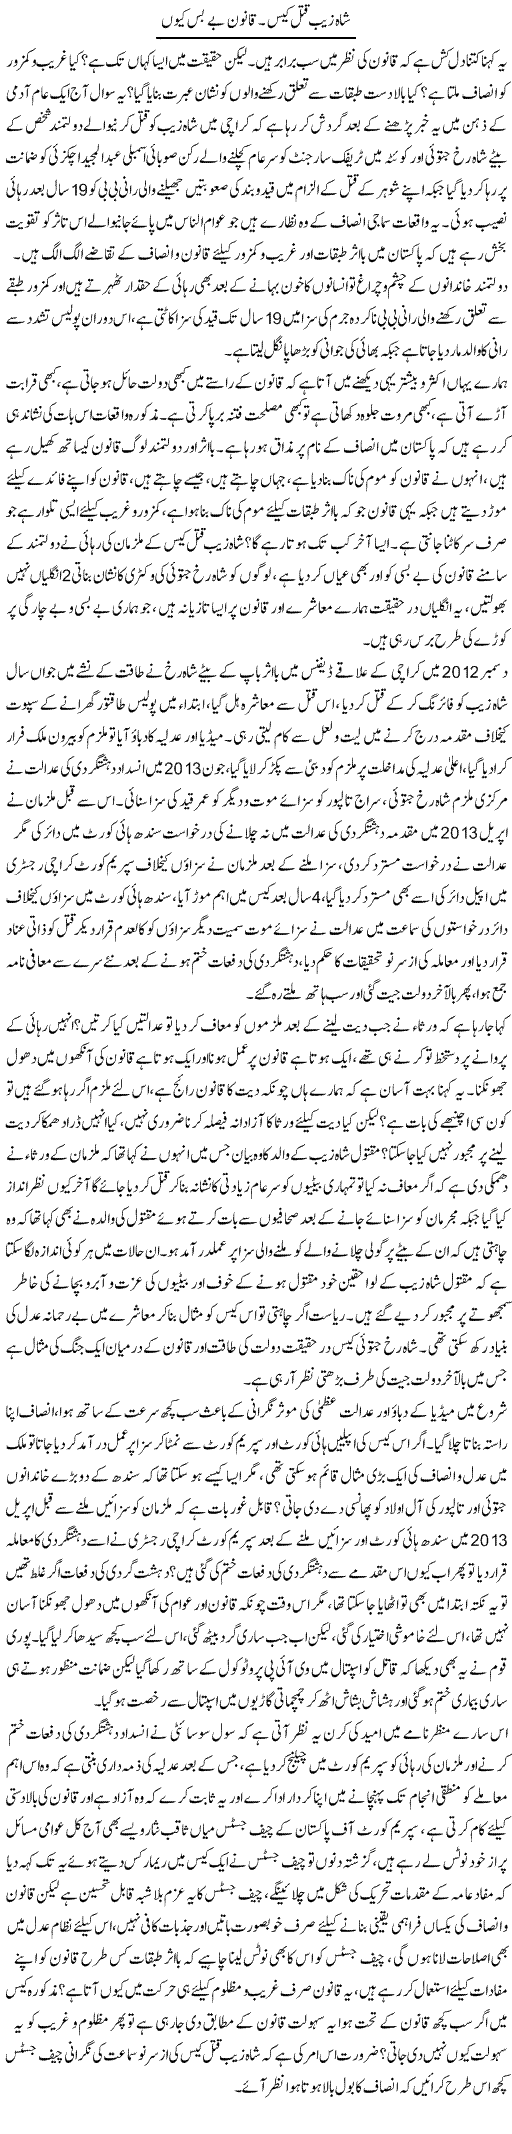 Shah Zaib Qatal Case. Qanoon Be Bas Kyun | Tahir Najmi | Daily Urdu Columns